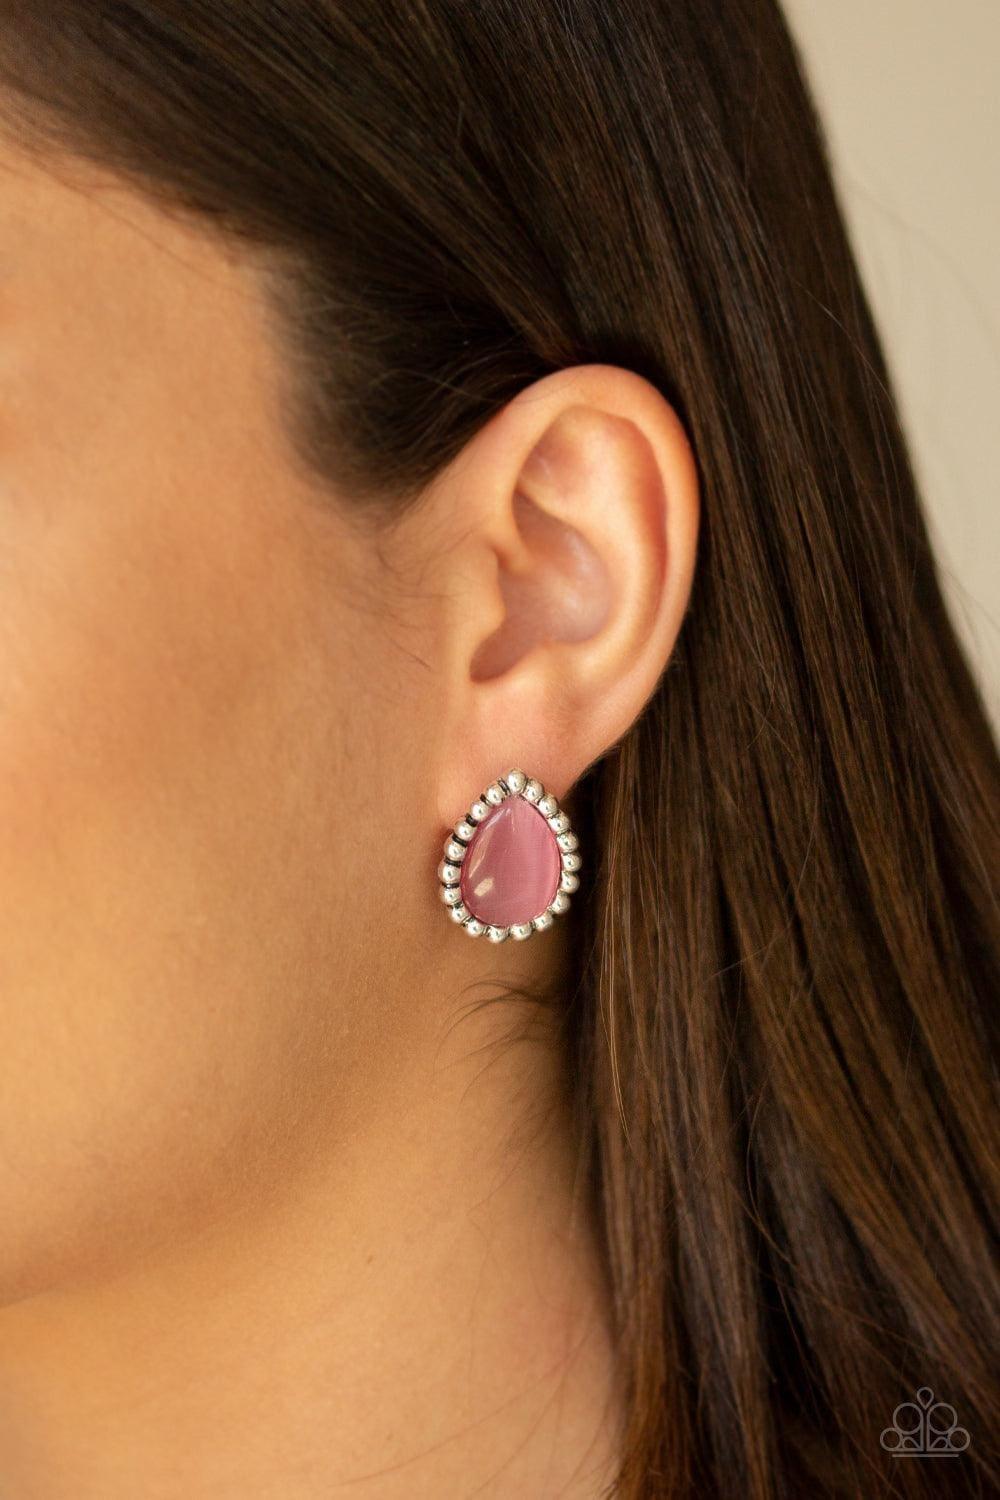 Paparazzi Accessories - I Wanna Glow - Pink Earrings - Bling by JessieK